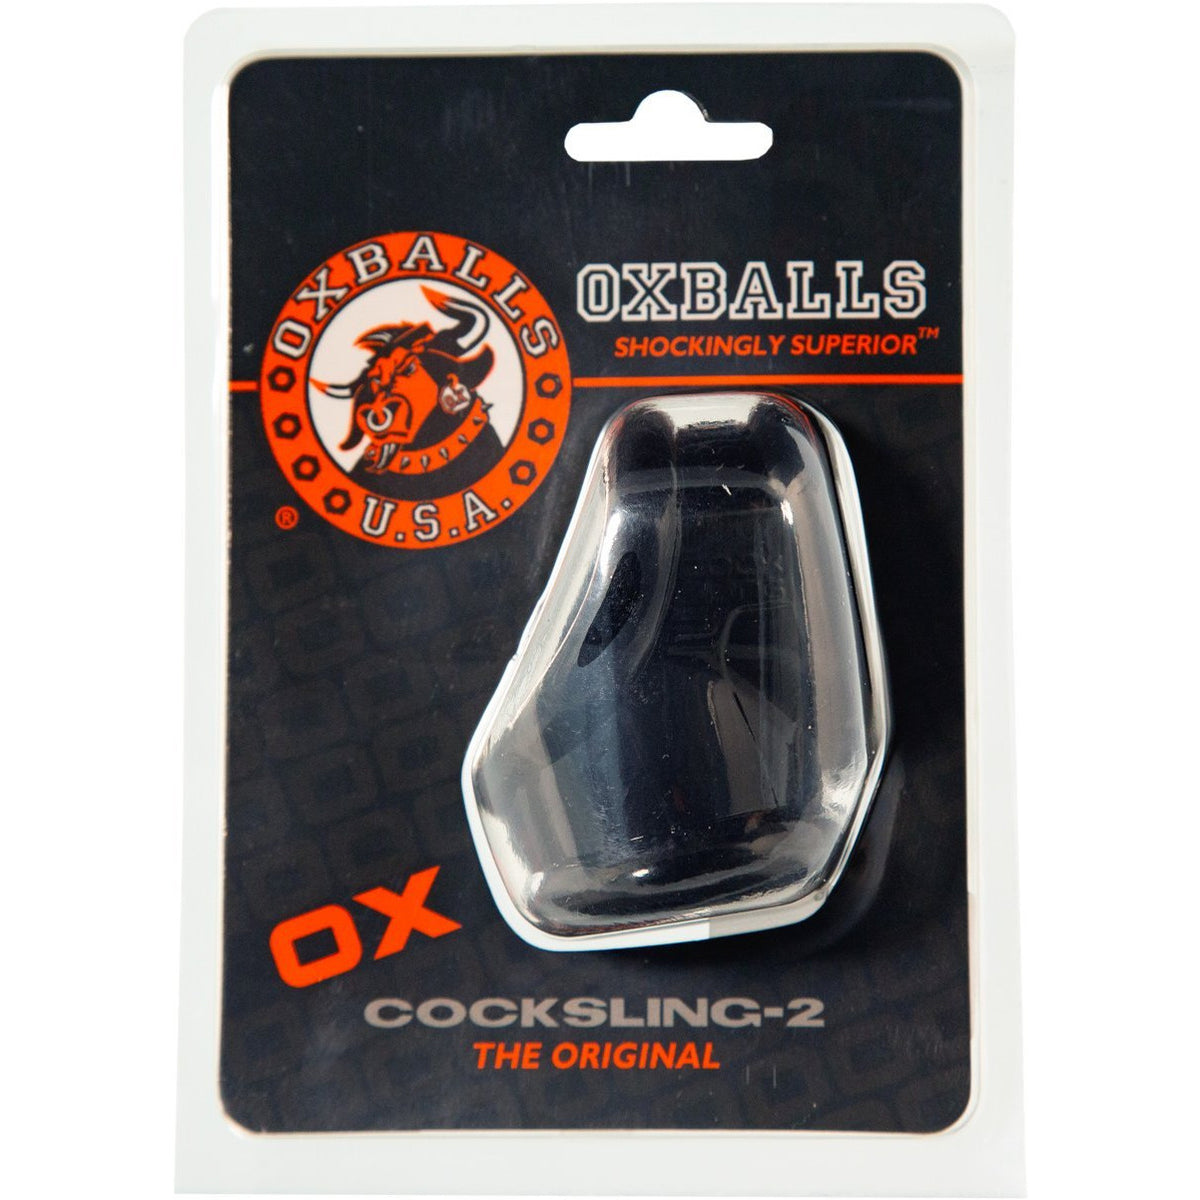 Oxballs Cocksling 2 – The Original